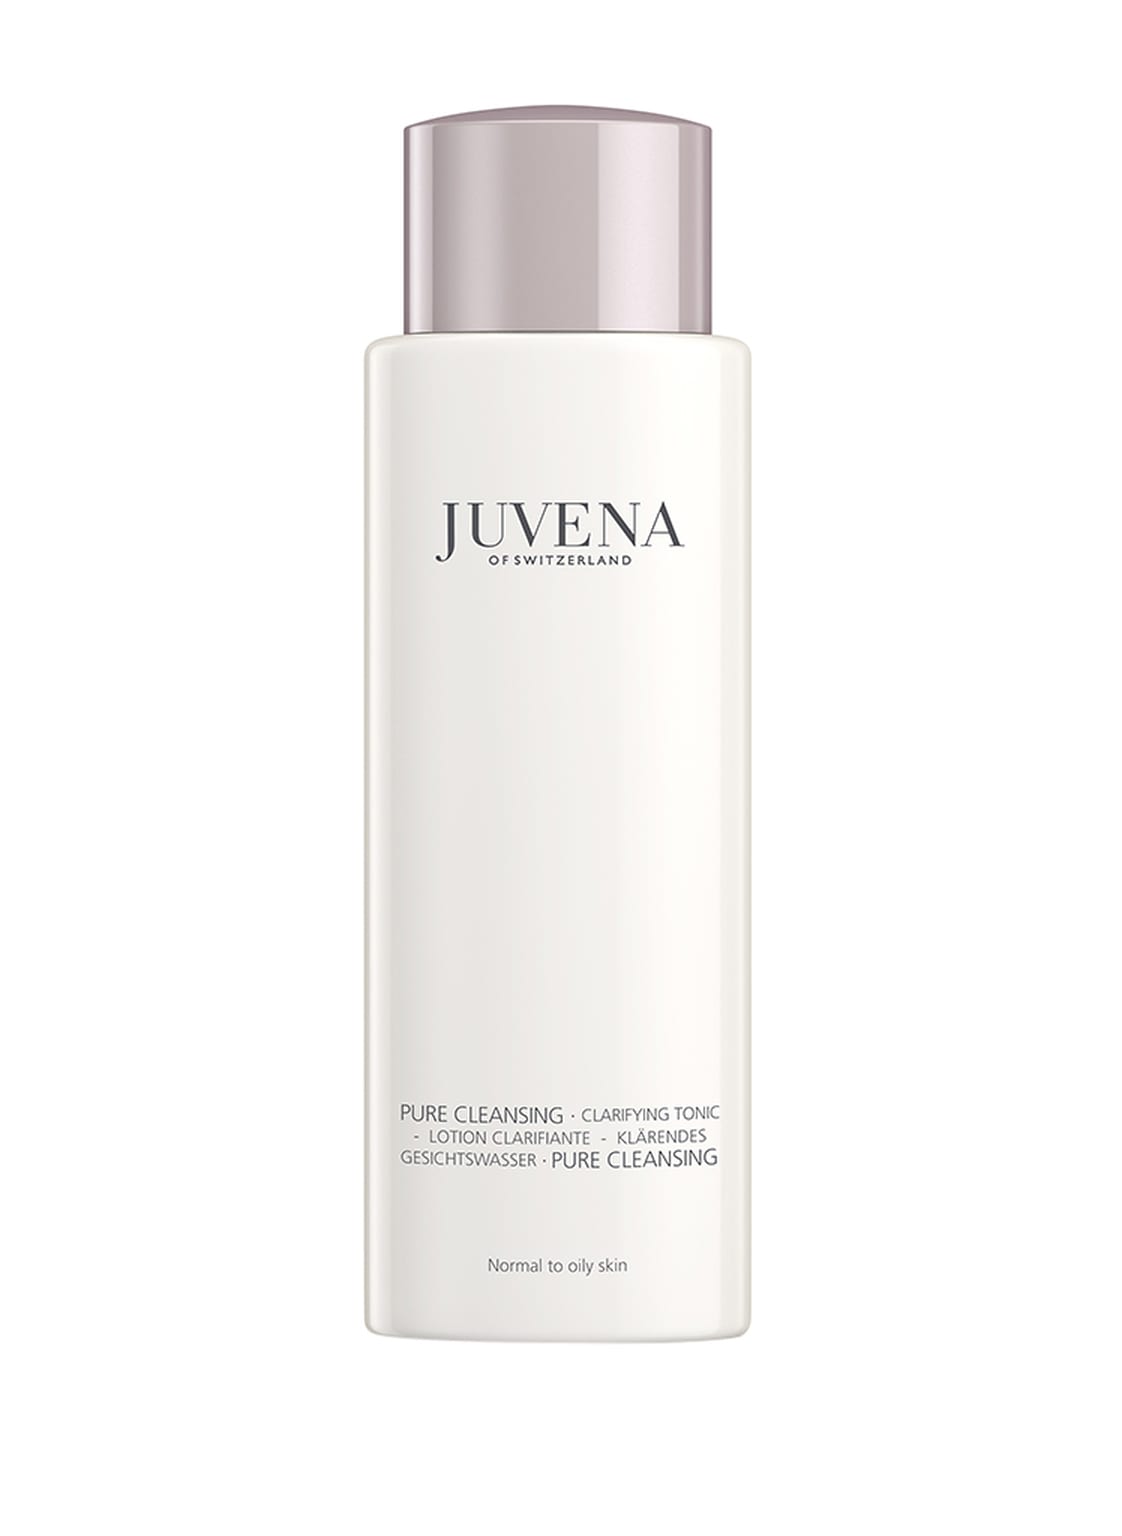 Image of Juvena Pure Cleansing Clarifying Tonic 200 ml